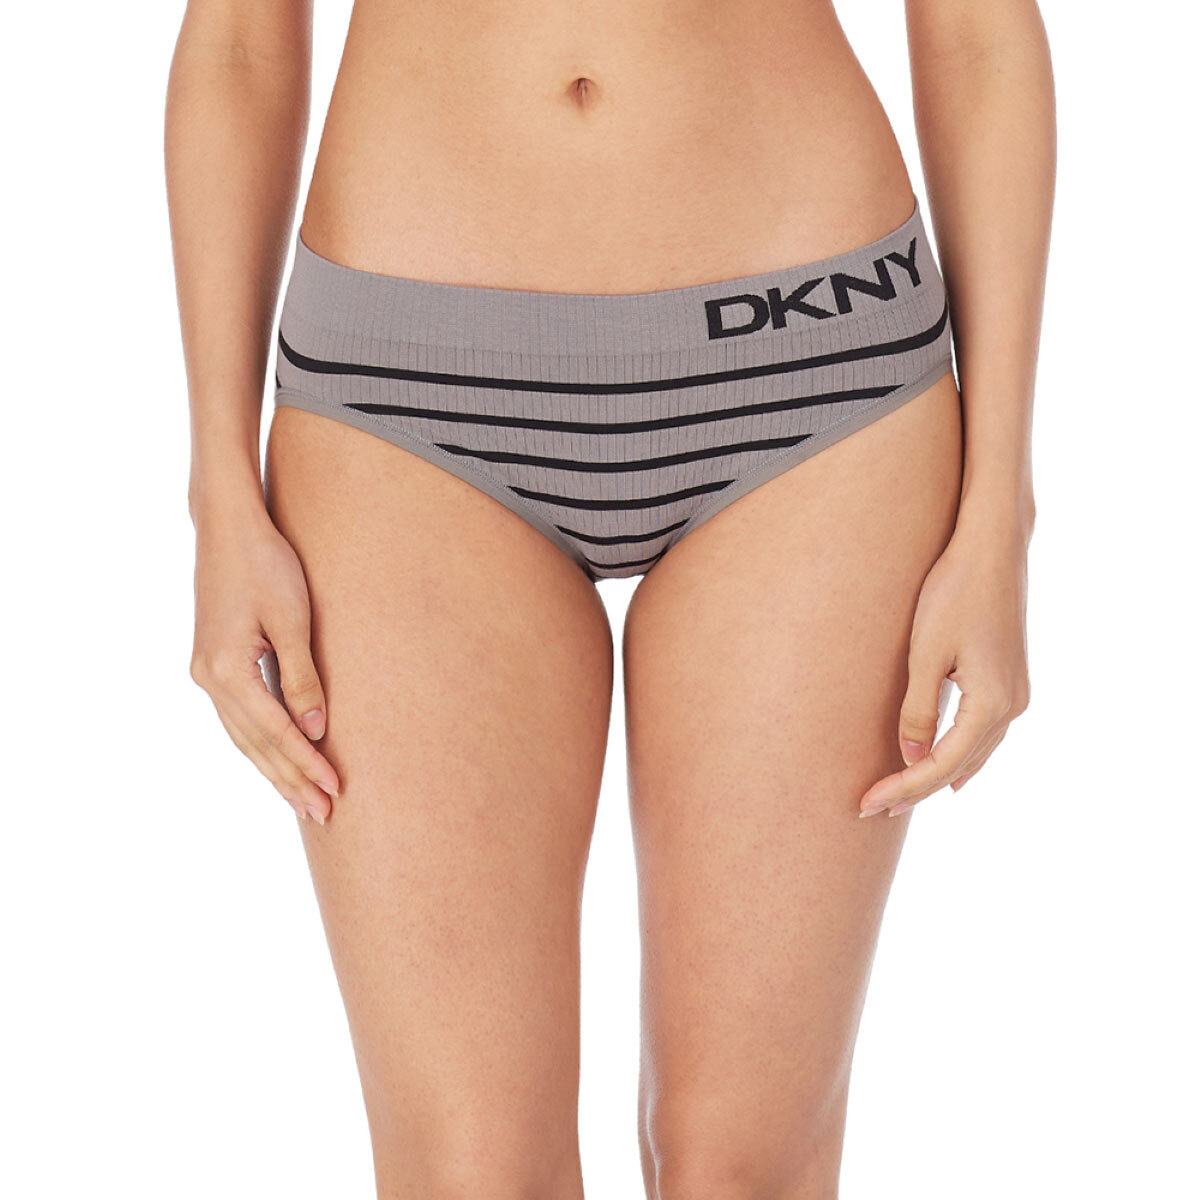 DKNY Women's Seamless Litewear Cut Anywhere Thong Panty, Storm, Large